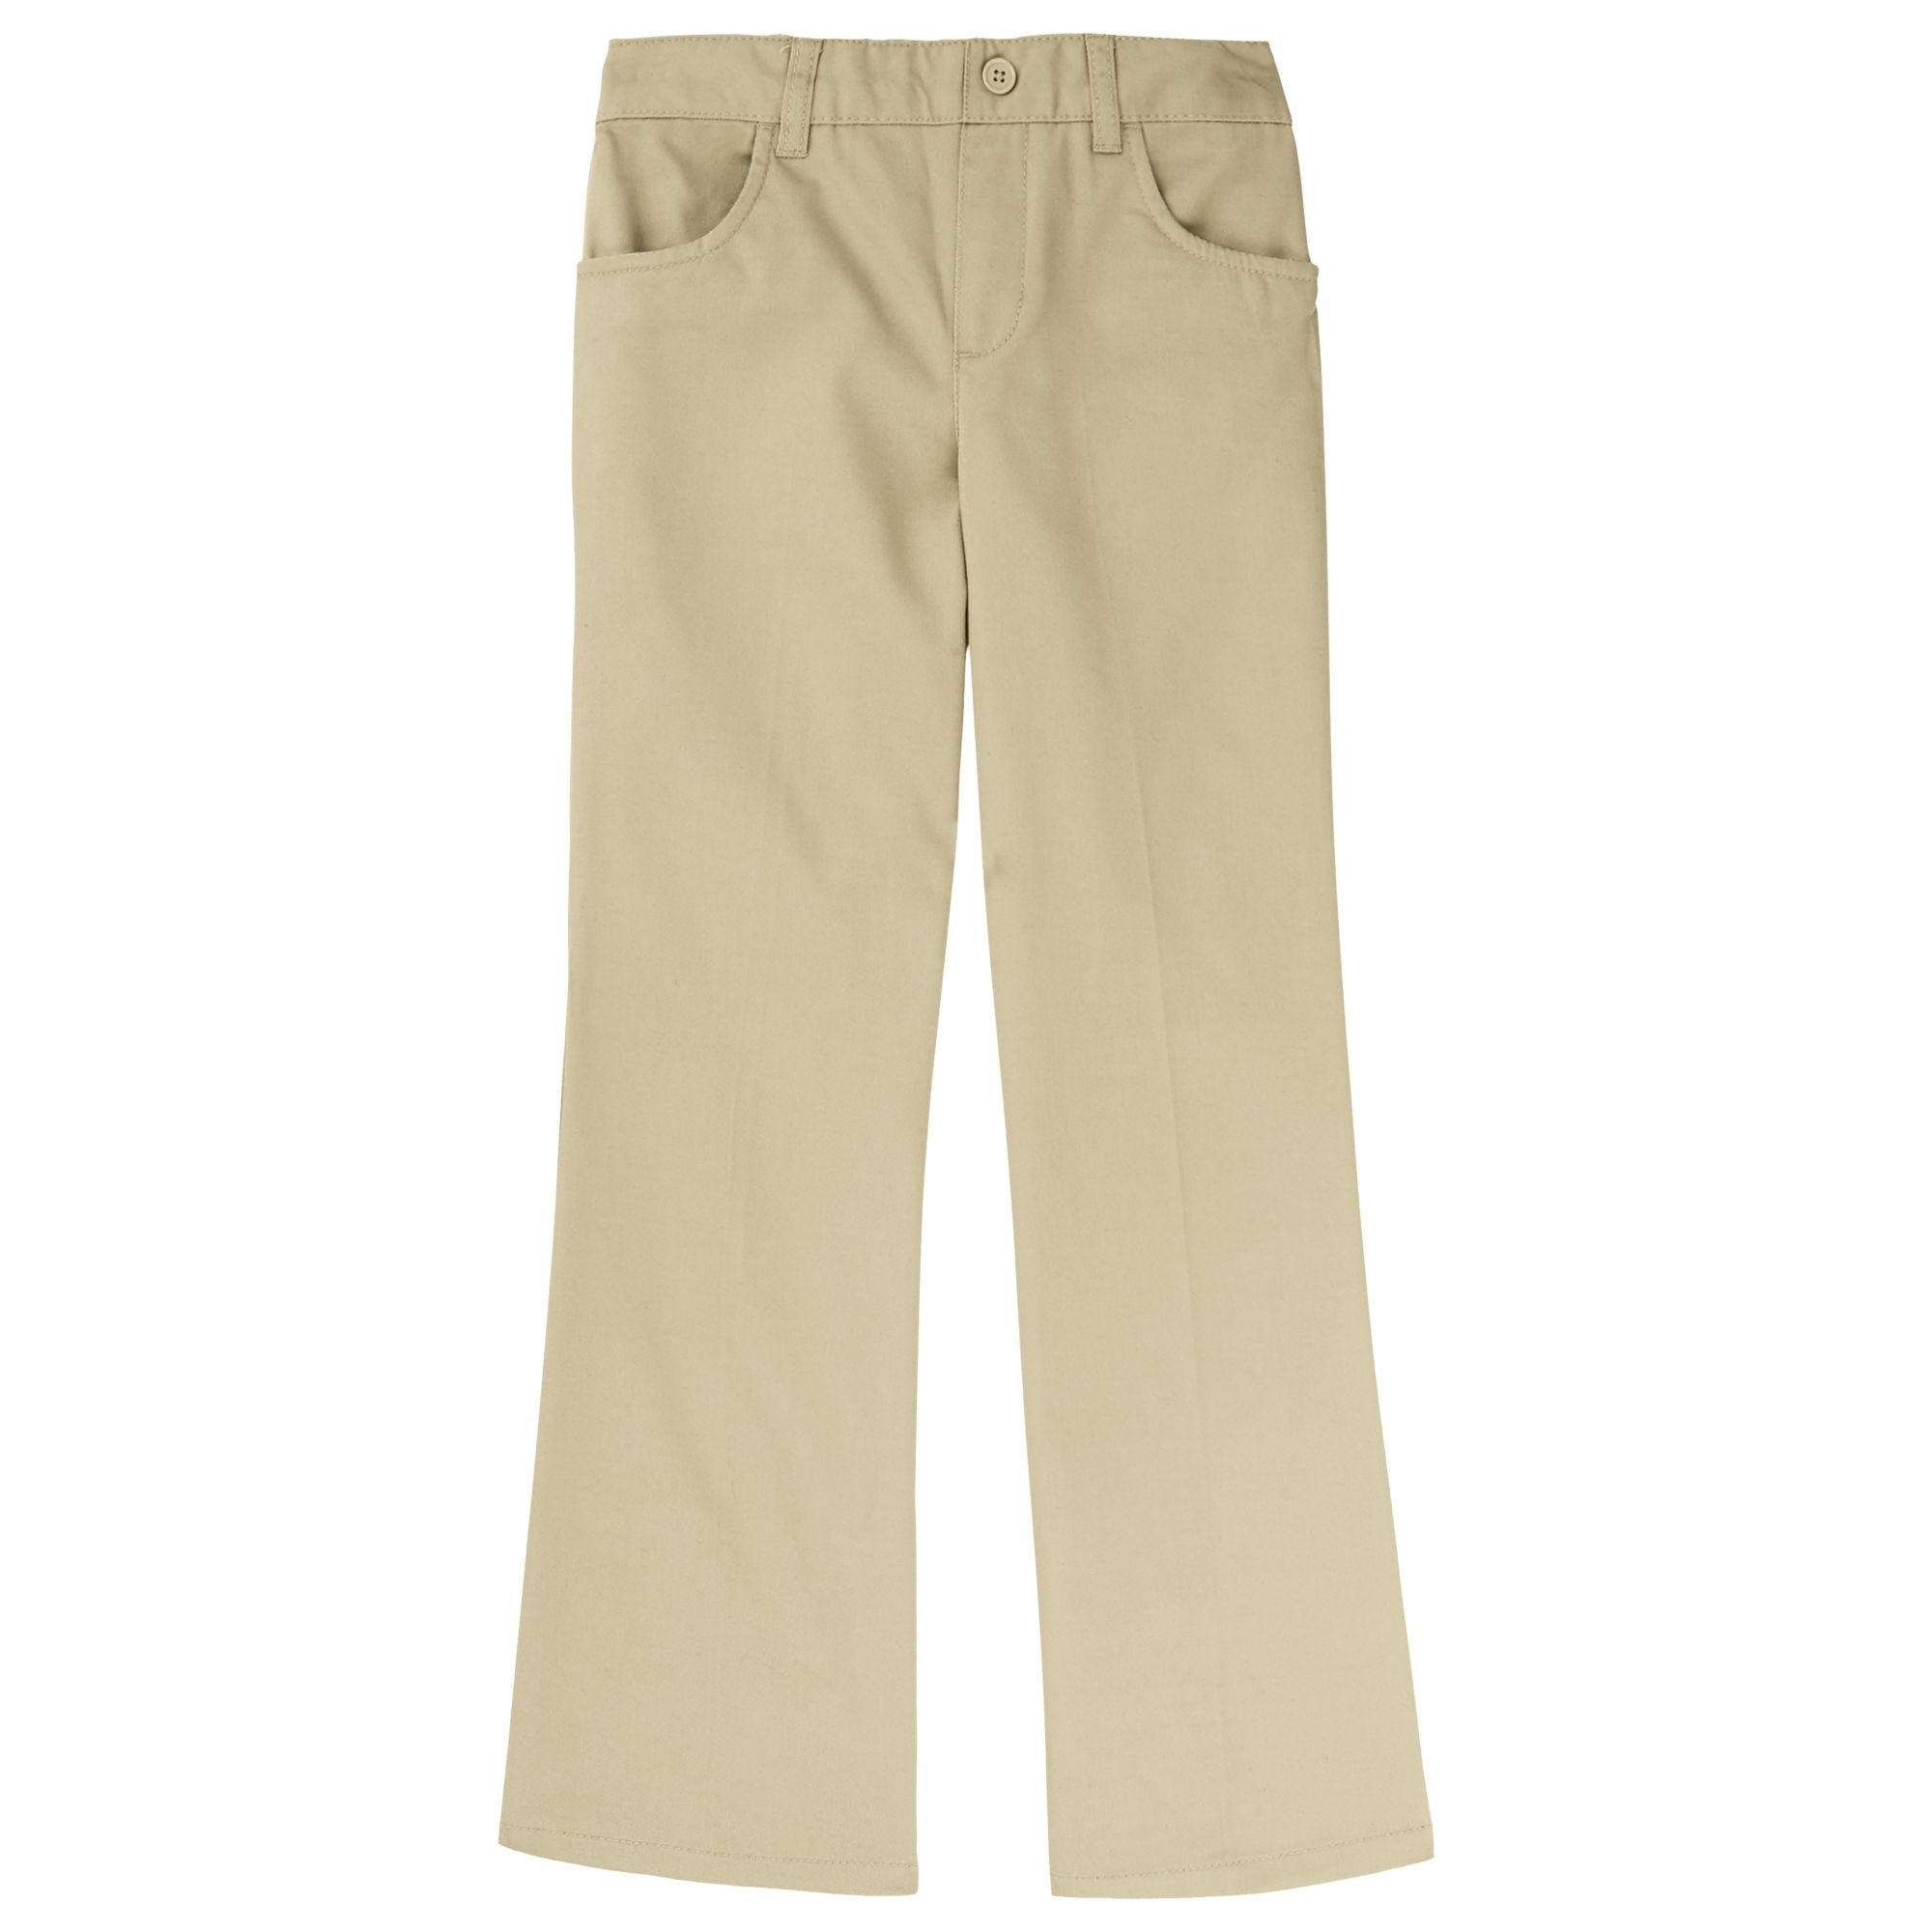 NW FRENCH TOAST Girl Uniform Pants Slacks Khaki SZ 8-10 Plus STRIPED Fabric Belt 